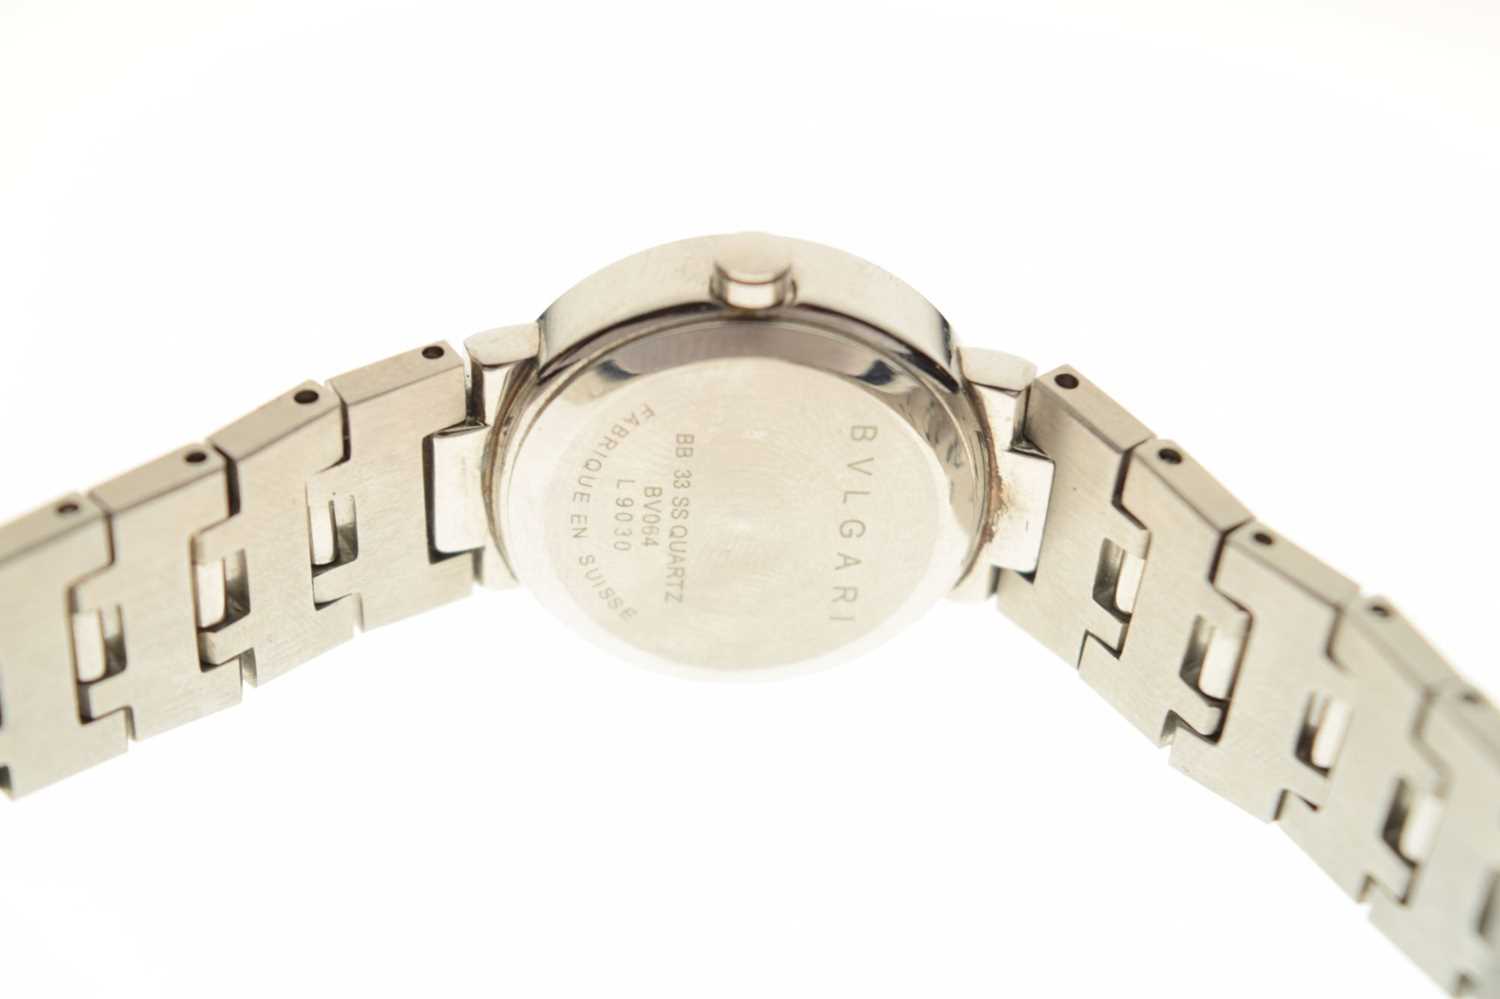 Bulgari - Lady's stainless steel quartz wristwatch - Image 8 of 10